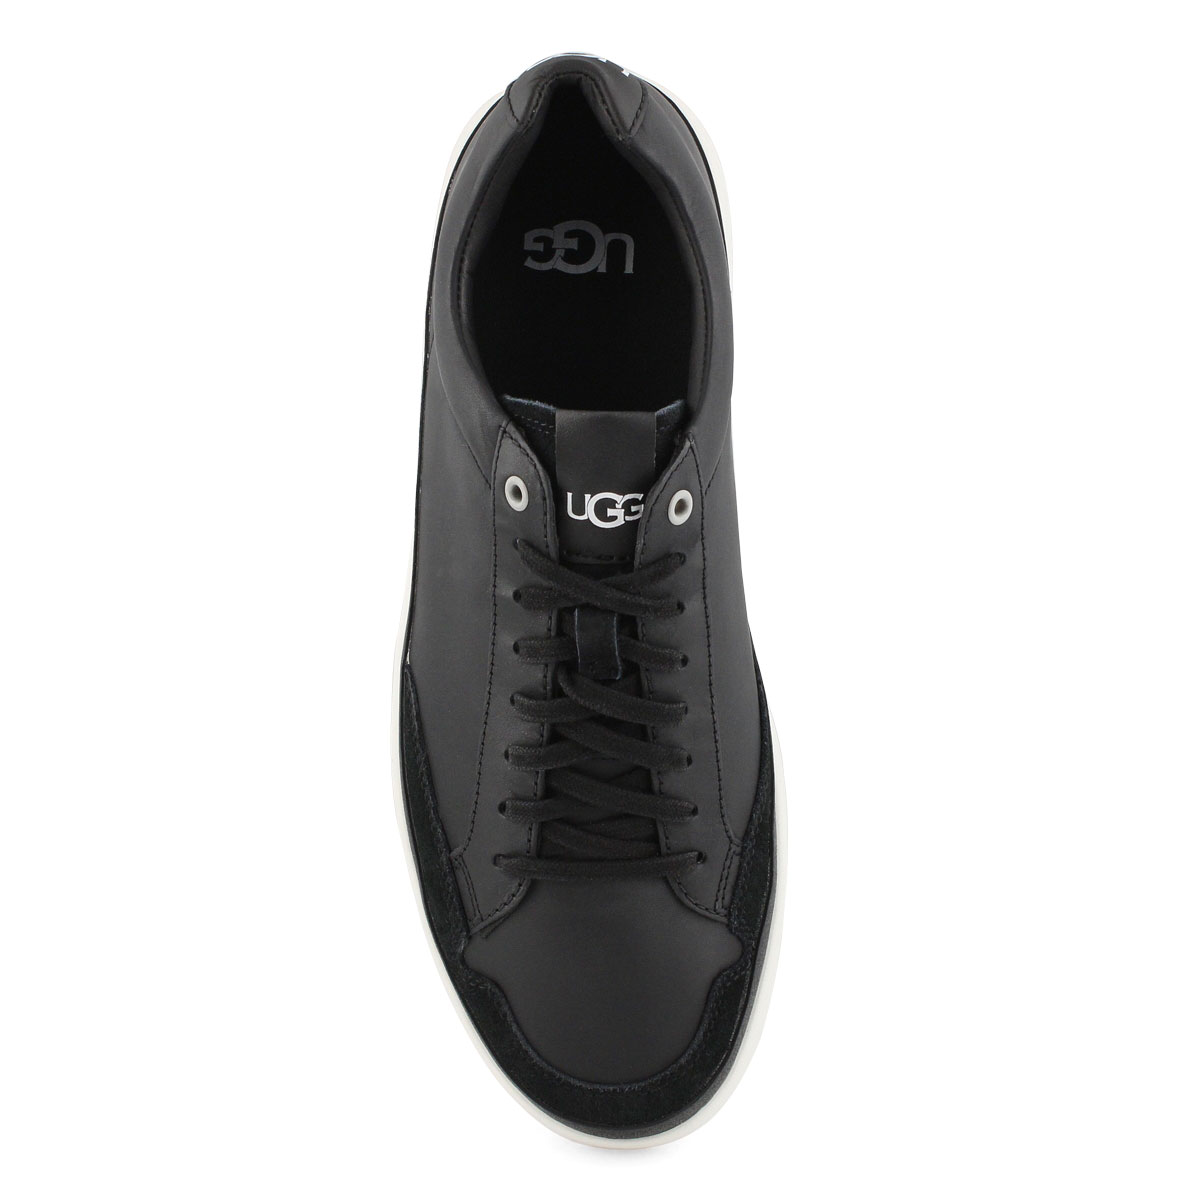 UGG Men's South Bay Lace Up Sneaker - Black | SoftMoc.com